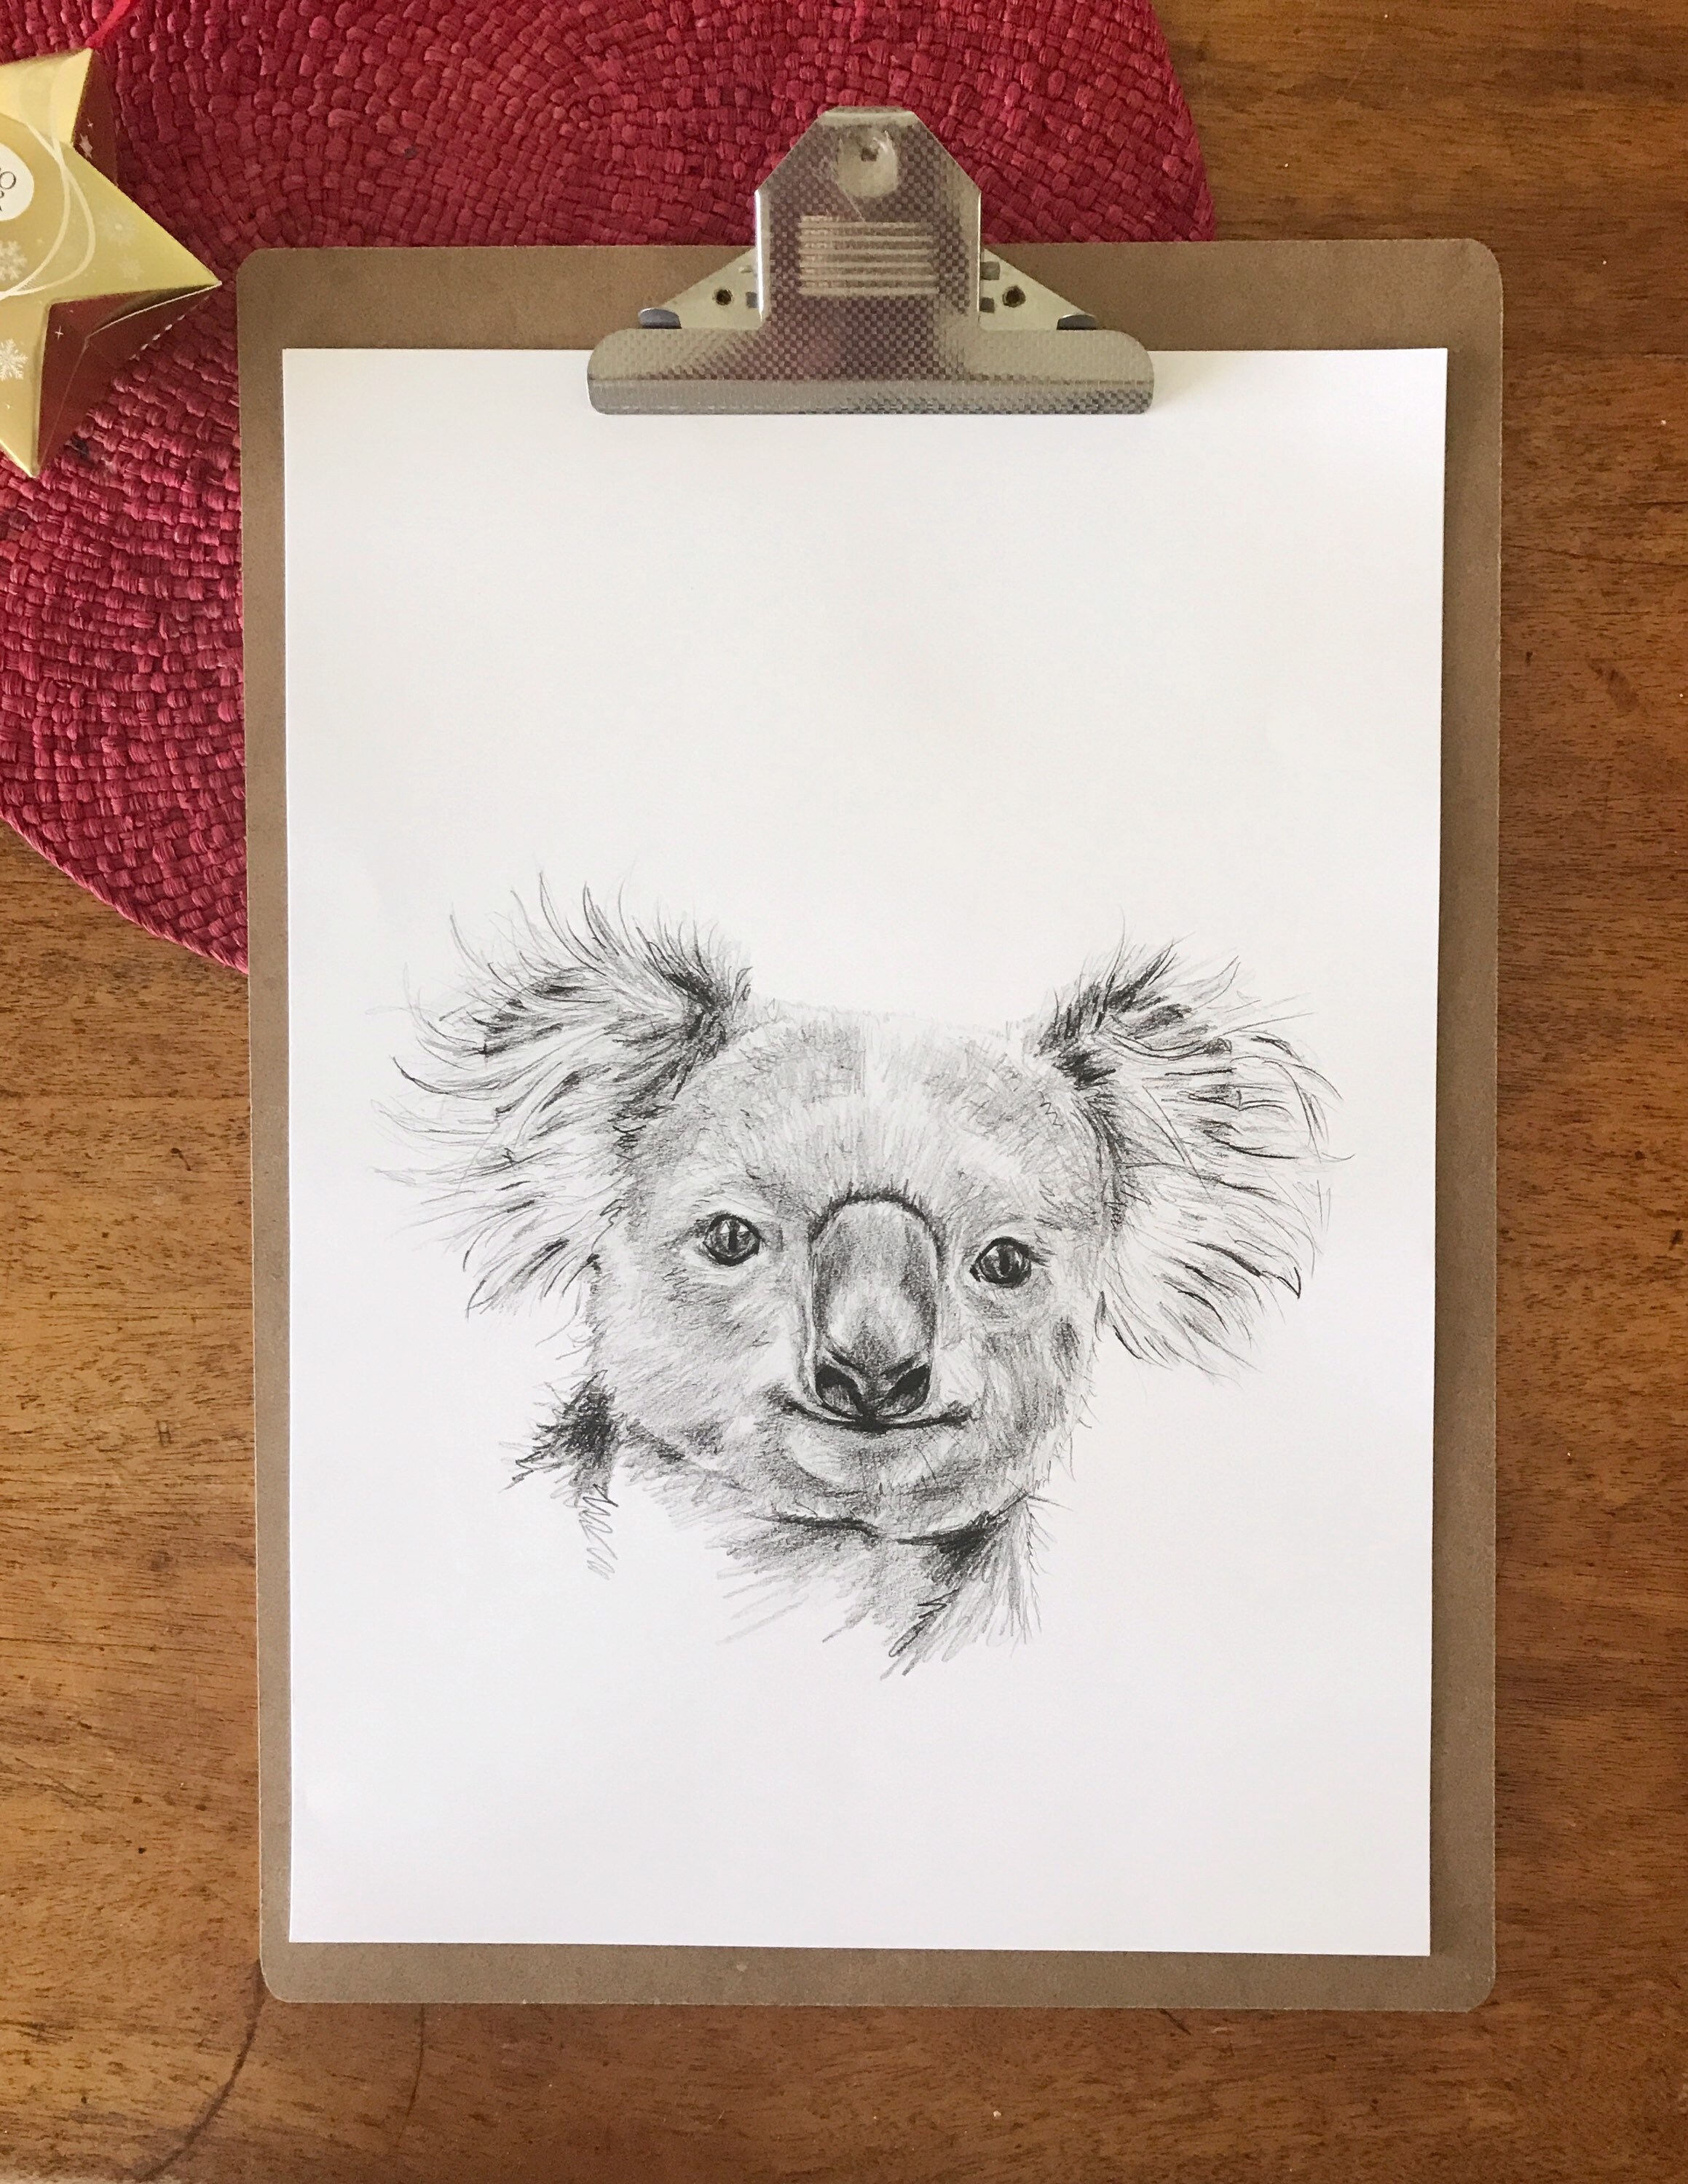 Hand Drawn Koala Portrait Drawing Print. Black and White Sketch